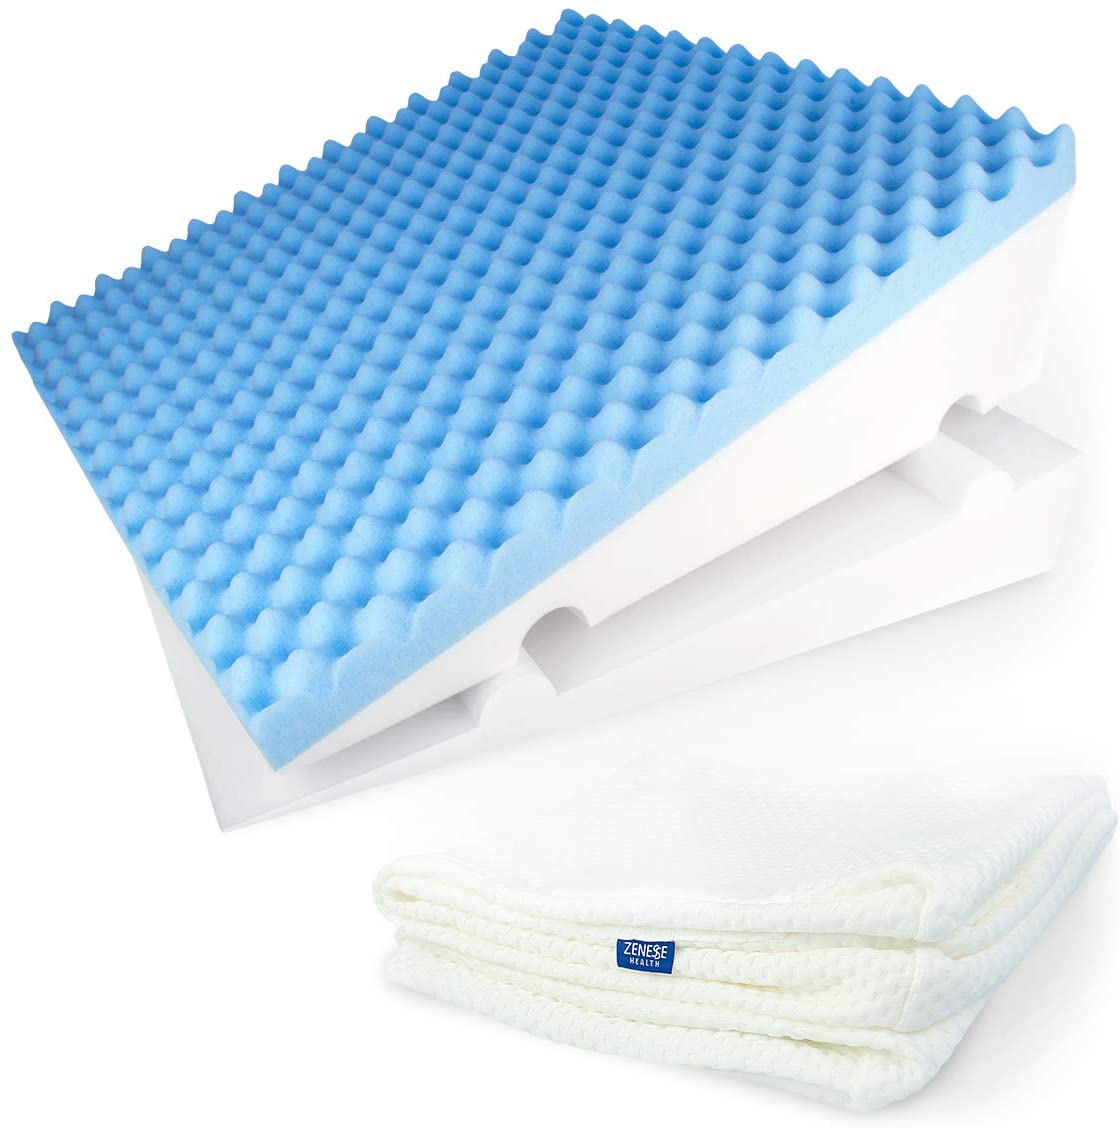 LUXELIFT Adjustable Memory Foam Bed Wedge Pillow